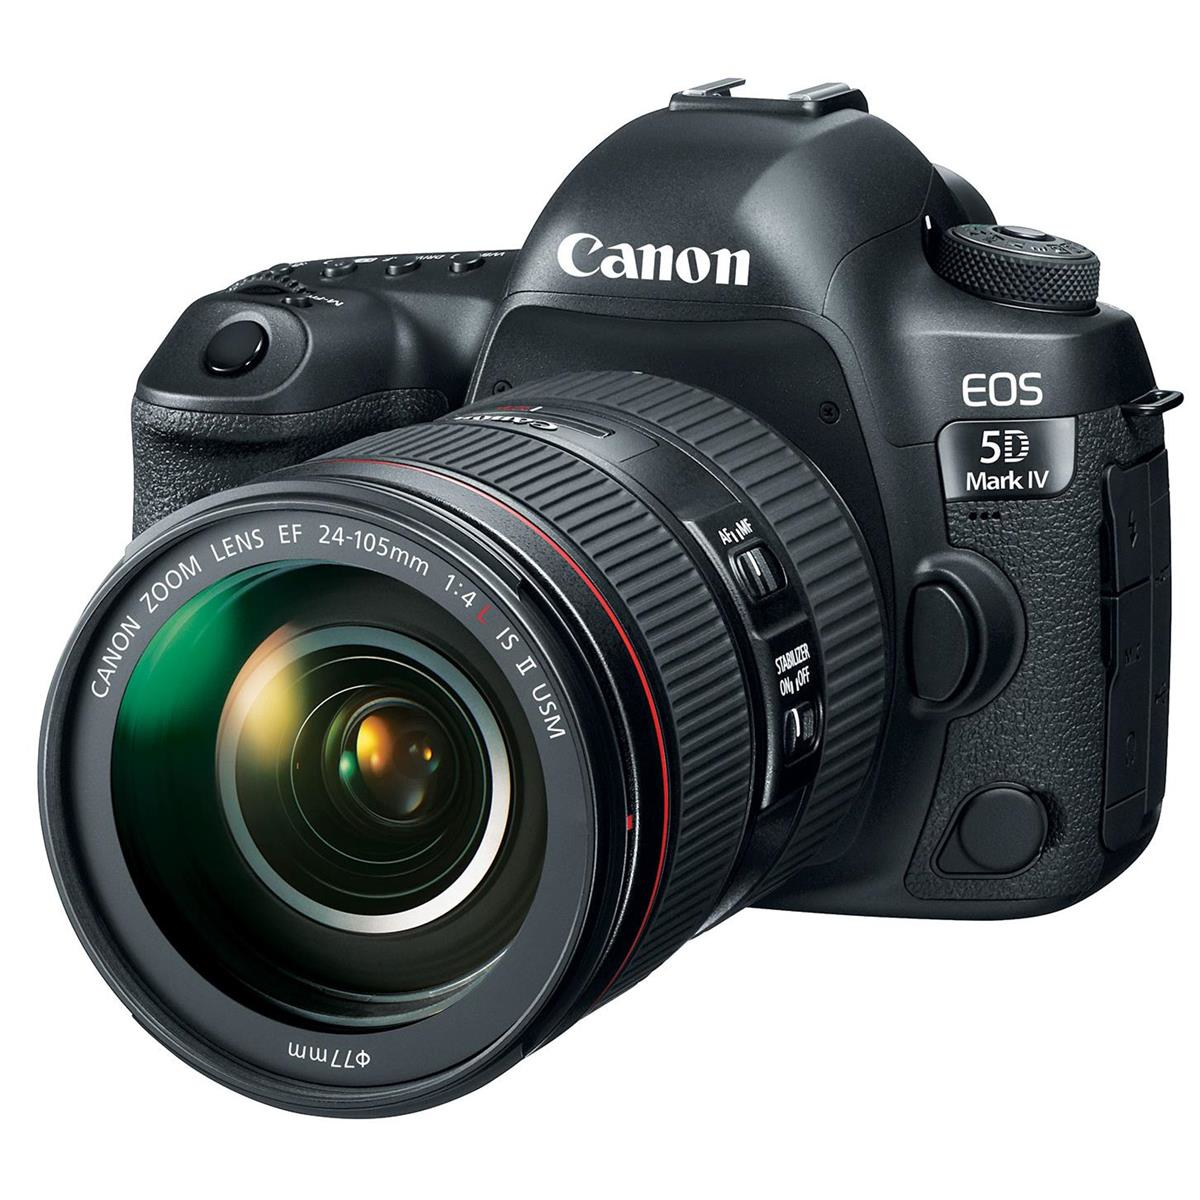 Canon EOS 5D Mark IV - Digital camera - SLR - 30.4 MP - Full Frame - 4K / 30 fps - 4.3x optical zoom EF 24-105mm F/4 L IS II USM lens - Wi-Fi, NFC